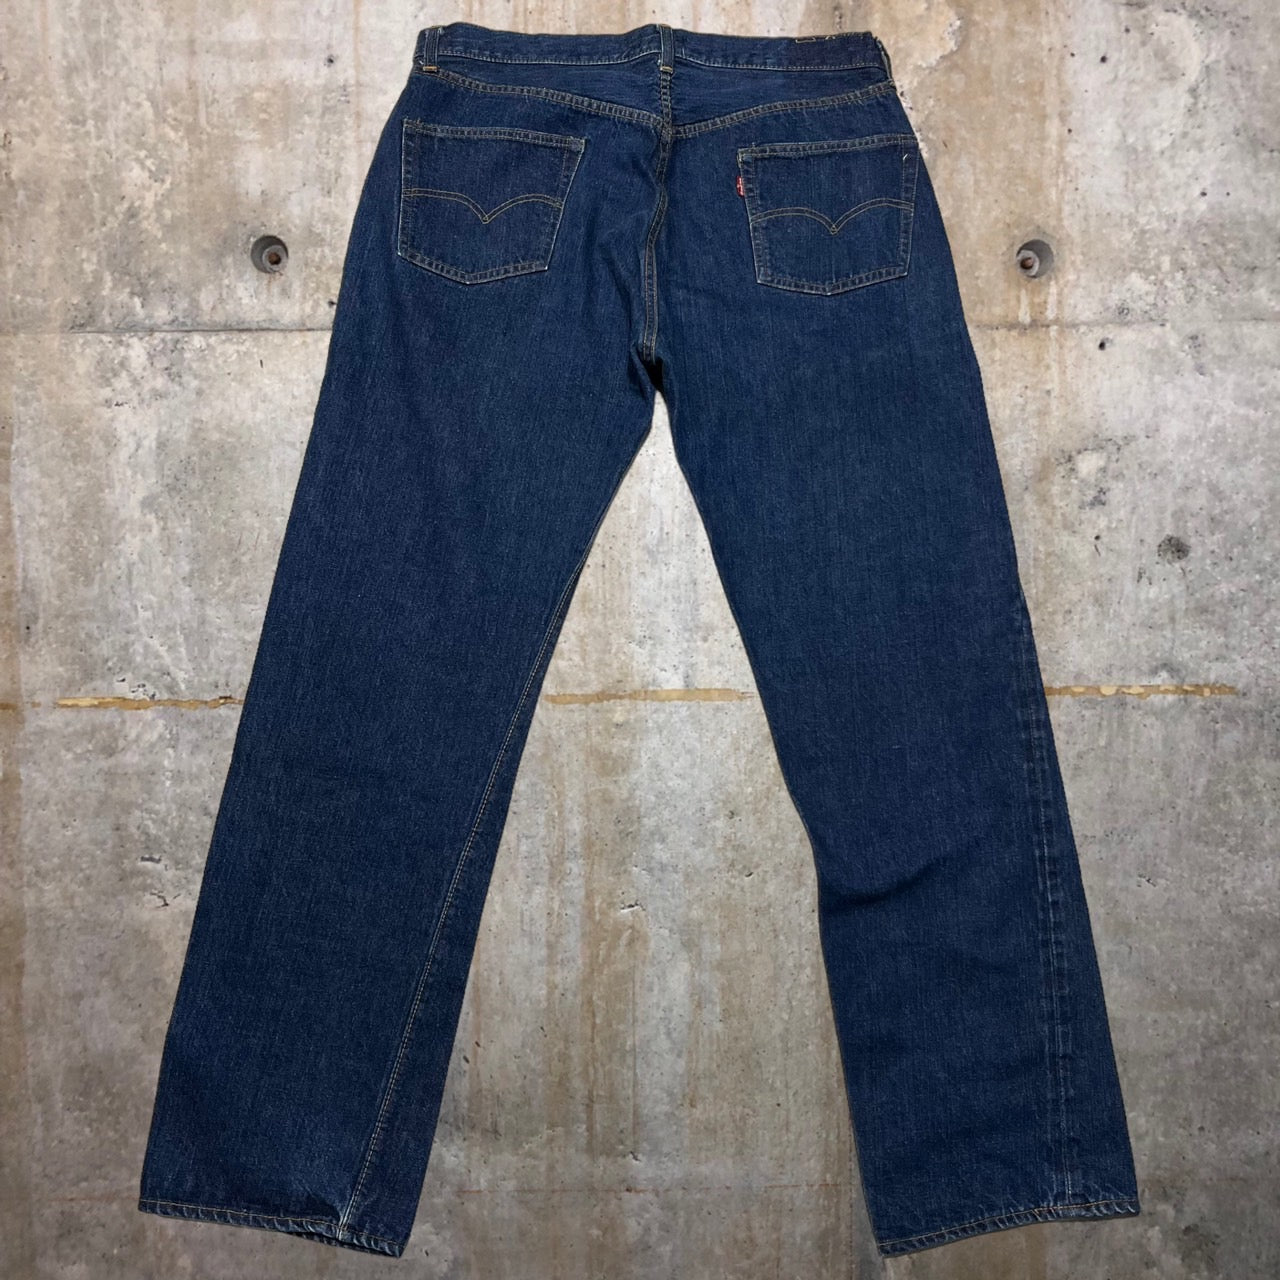 Levi's(リーバイス) 70's 66前期501 vintage denim pants/ヴィンテージデニムパンツ/ストレート 表記無し(W37程度) インディゴ/濃紺 70年代 70s スモールe  赤耳